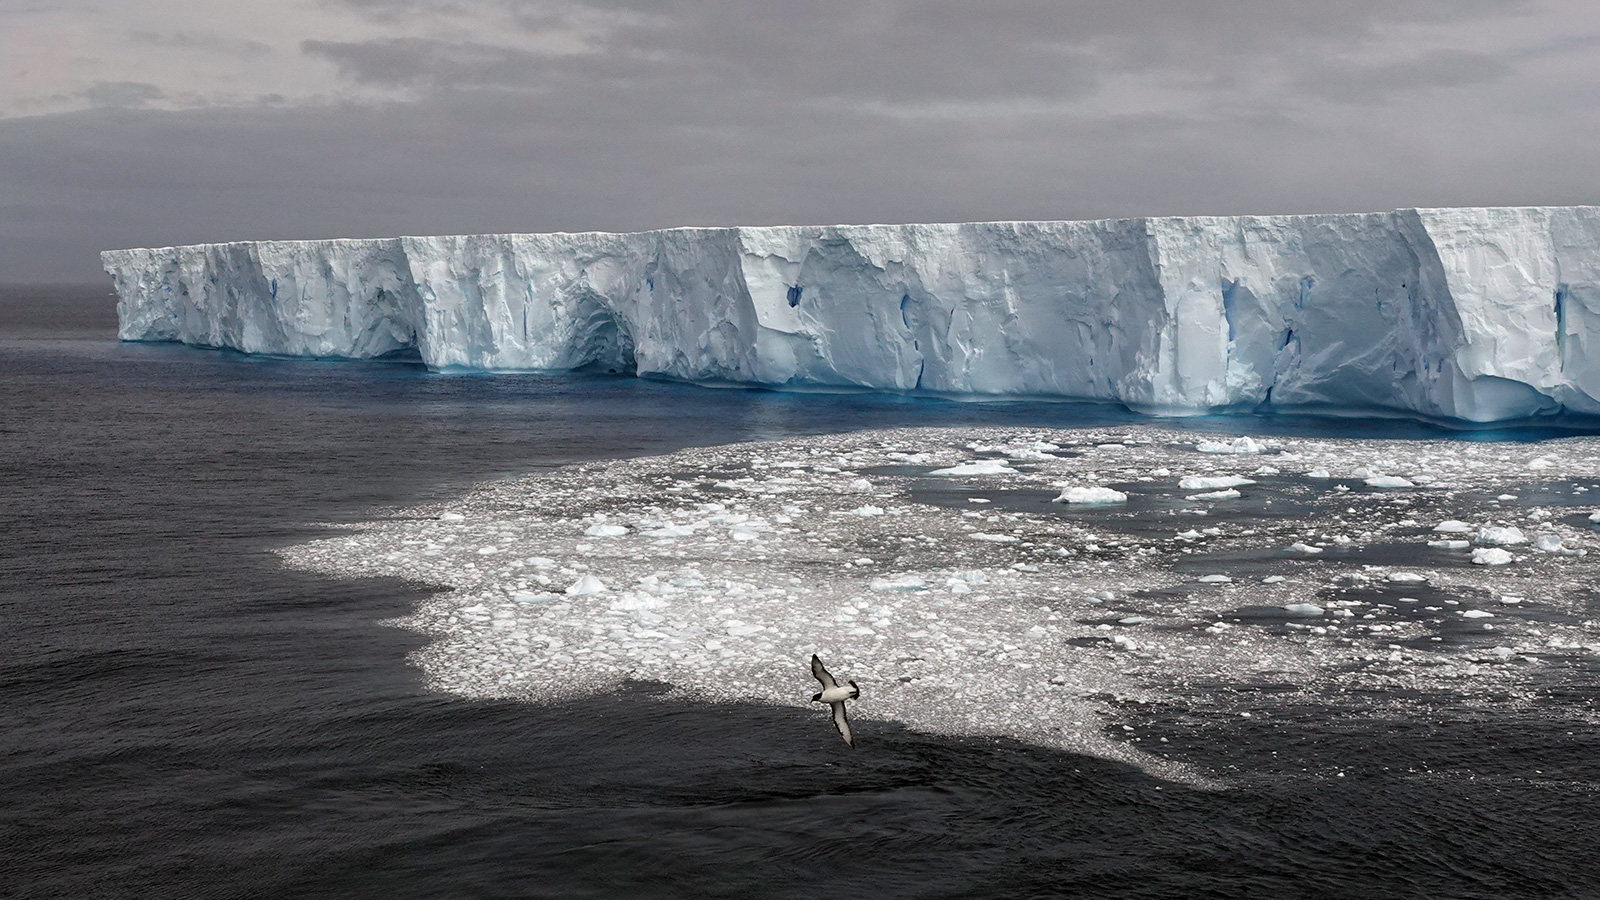  Iceberg, Bransfield Strait, Antarctica.